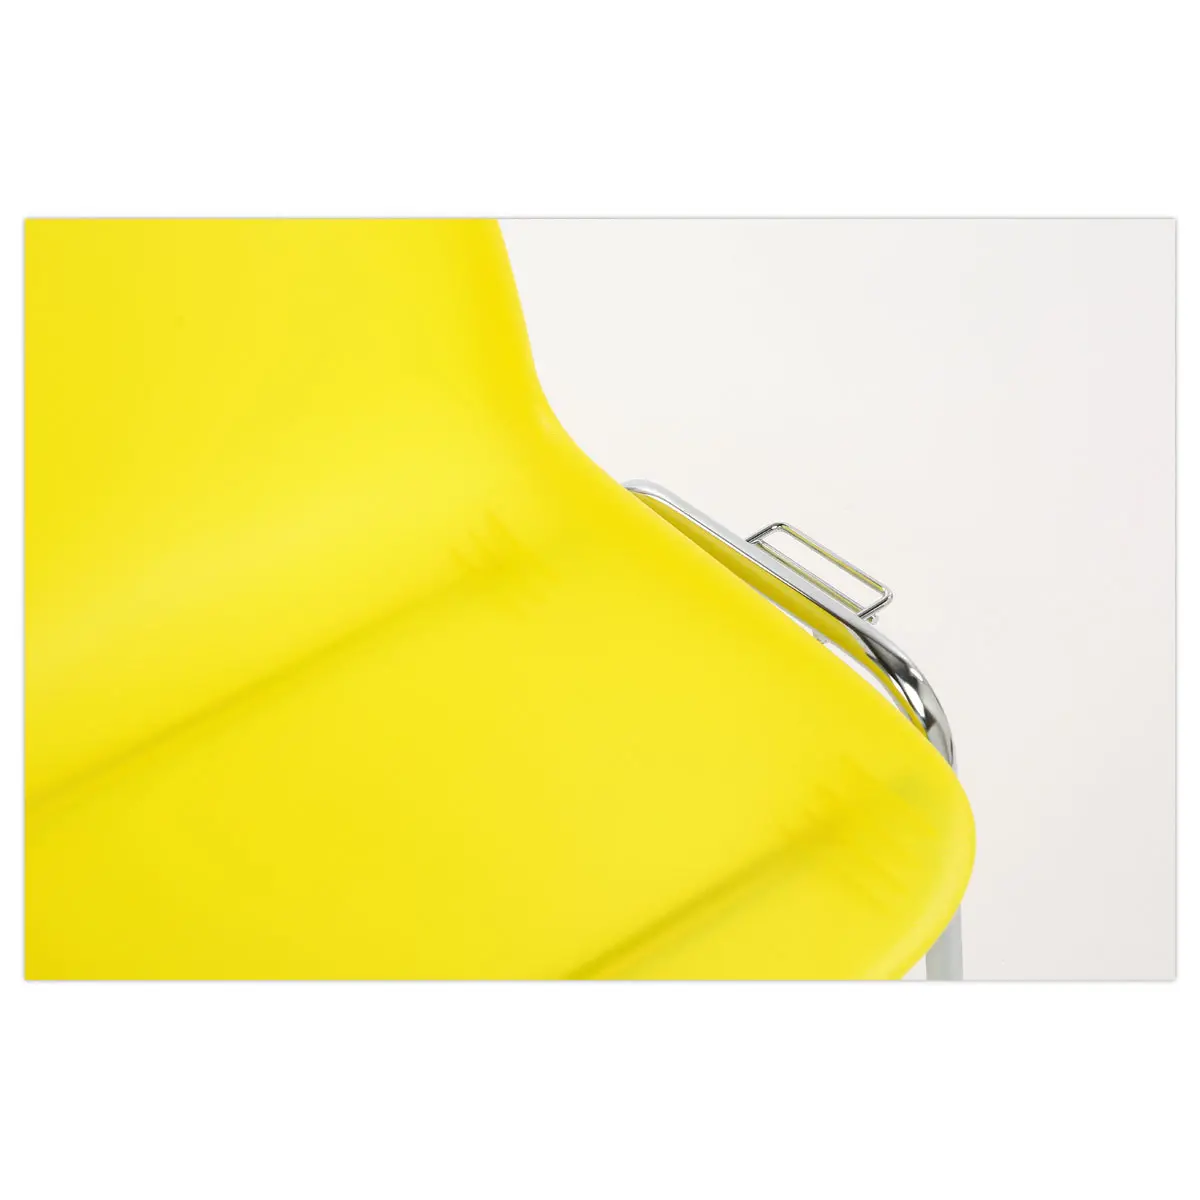 Chaise Charlotte translucide jaune photo du produit